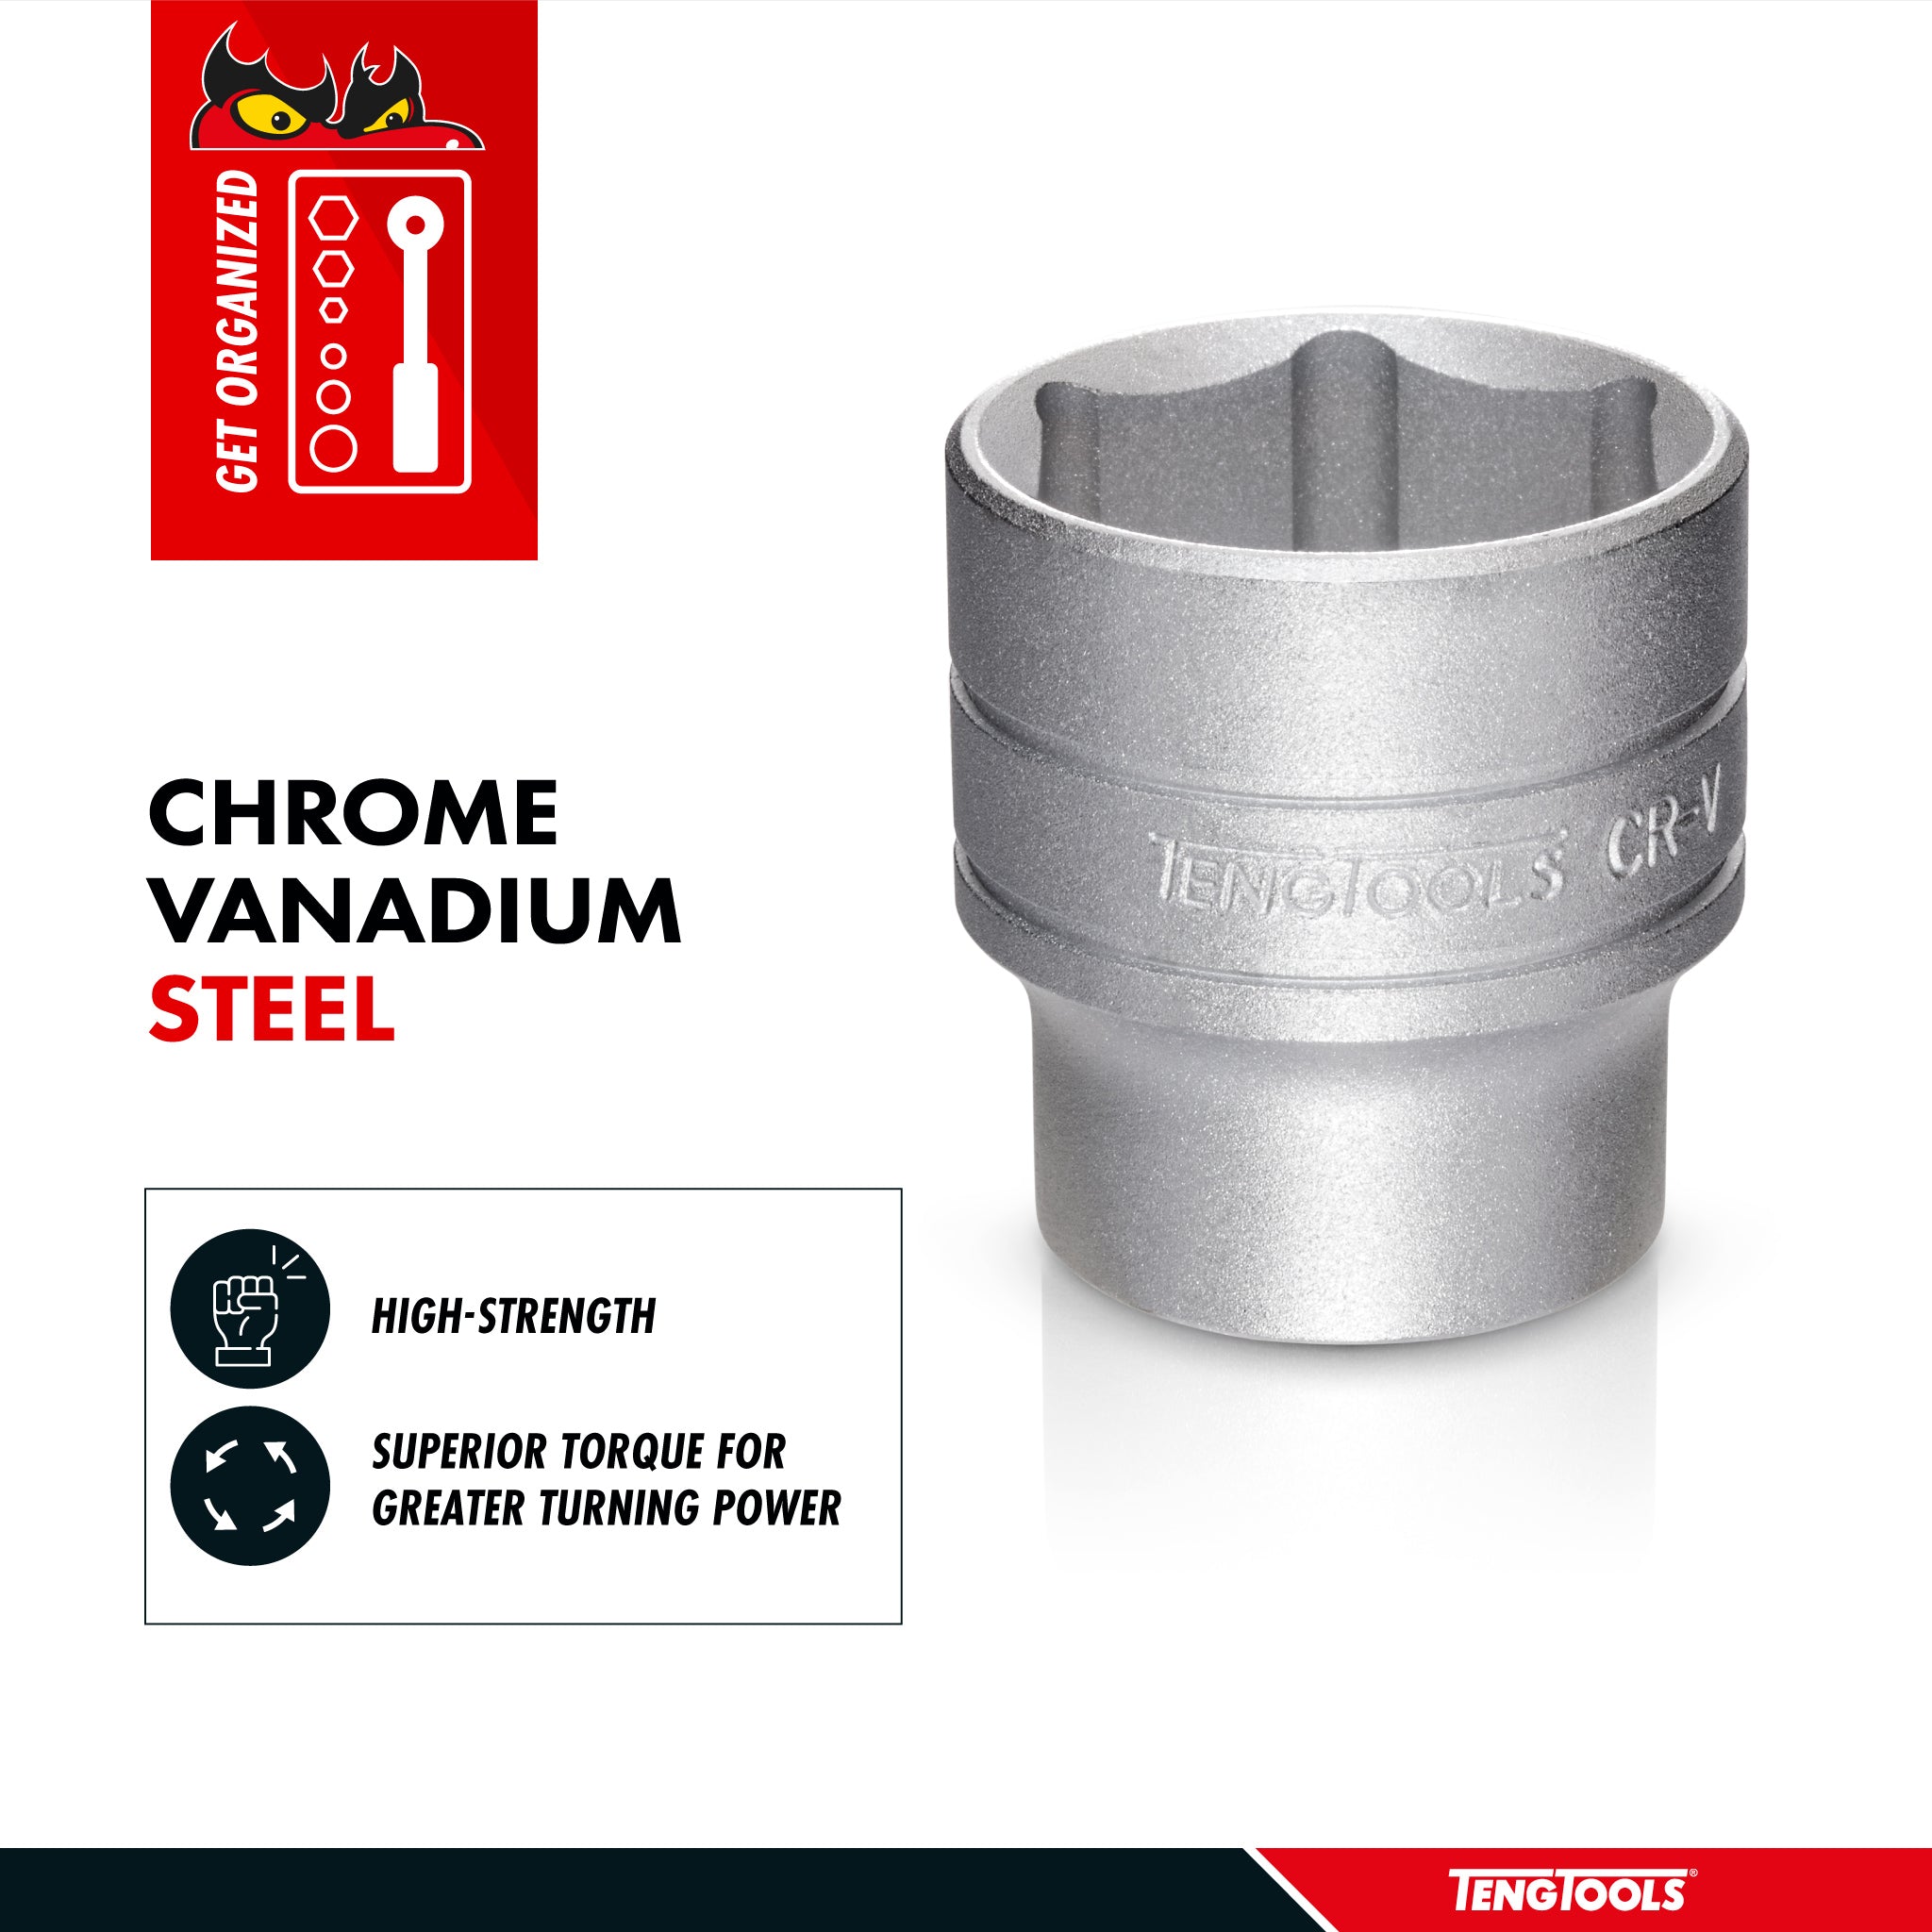 Teng Tools 1/4 Inch Drive 6 Point SAE Shallow Chrome Vanadium Sockets - 5/16